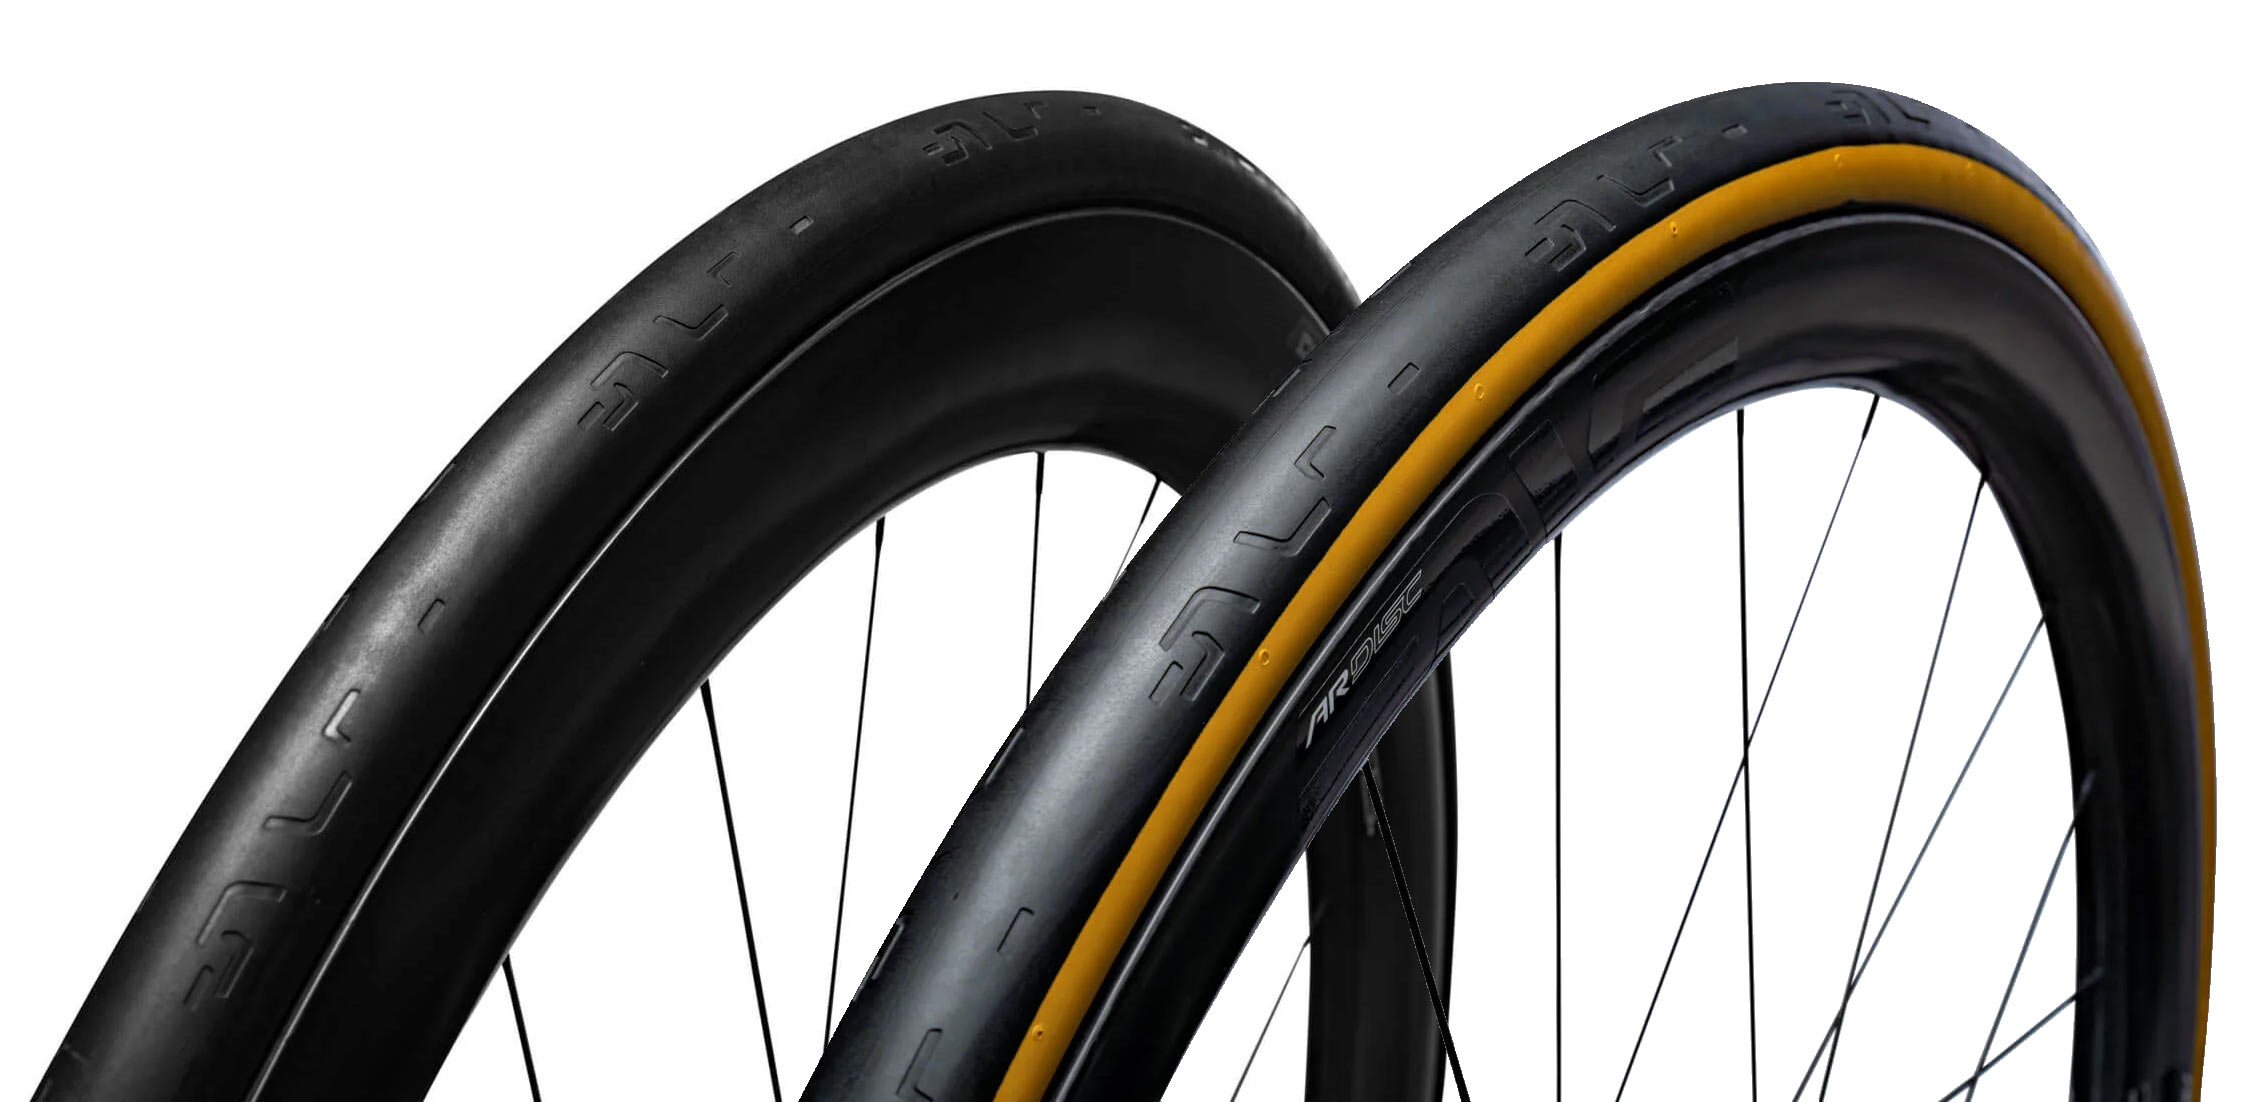 enve-ses-tubeless-road-bike-tires-33-35mm-widths-2.jpg